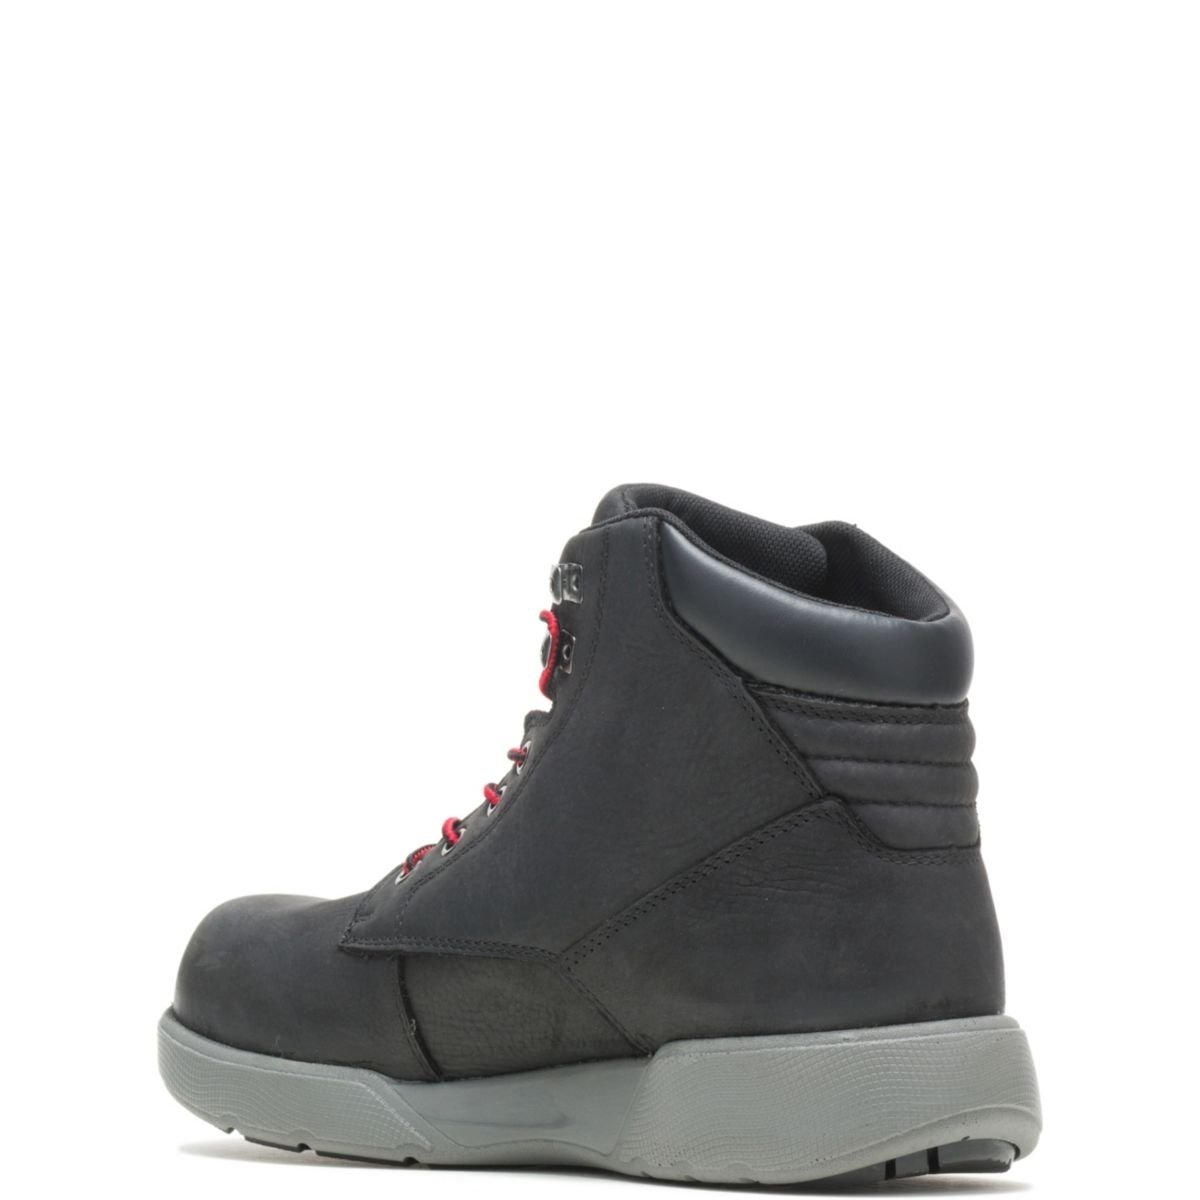 WOLVERINE Men's Kickstart 6 DuraShocksÂ® CarbonMAXÂ® Composite Toe Work Boot Black - W211116 BLACK - BLACK, 10.5